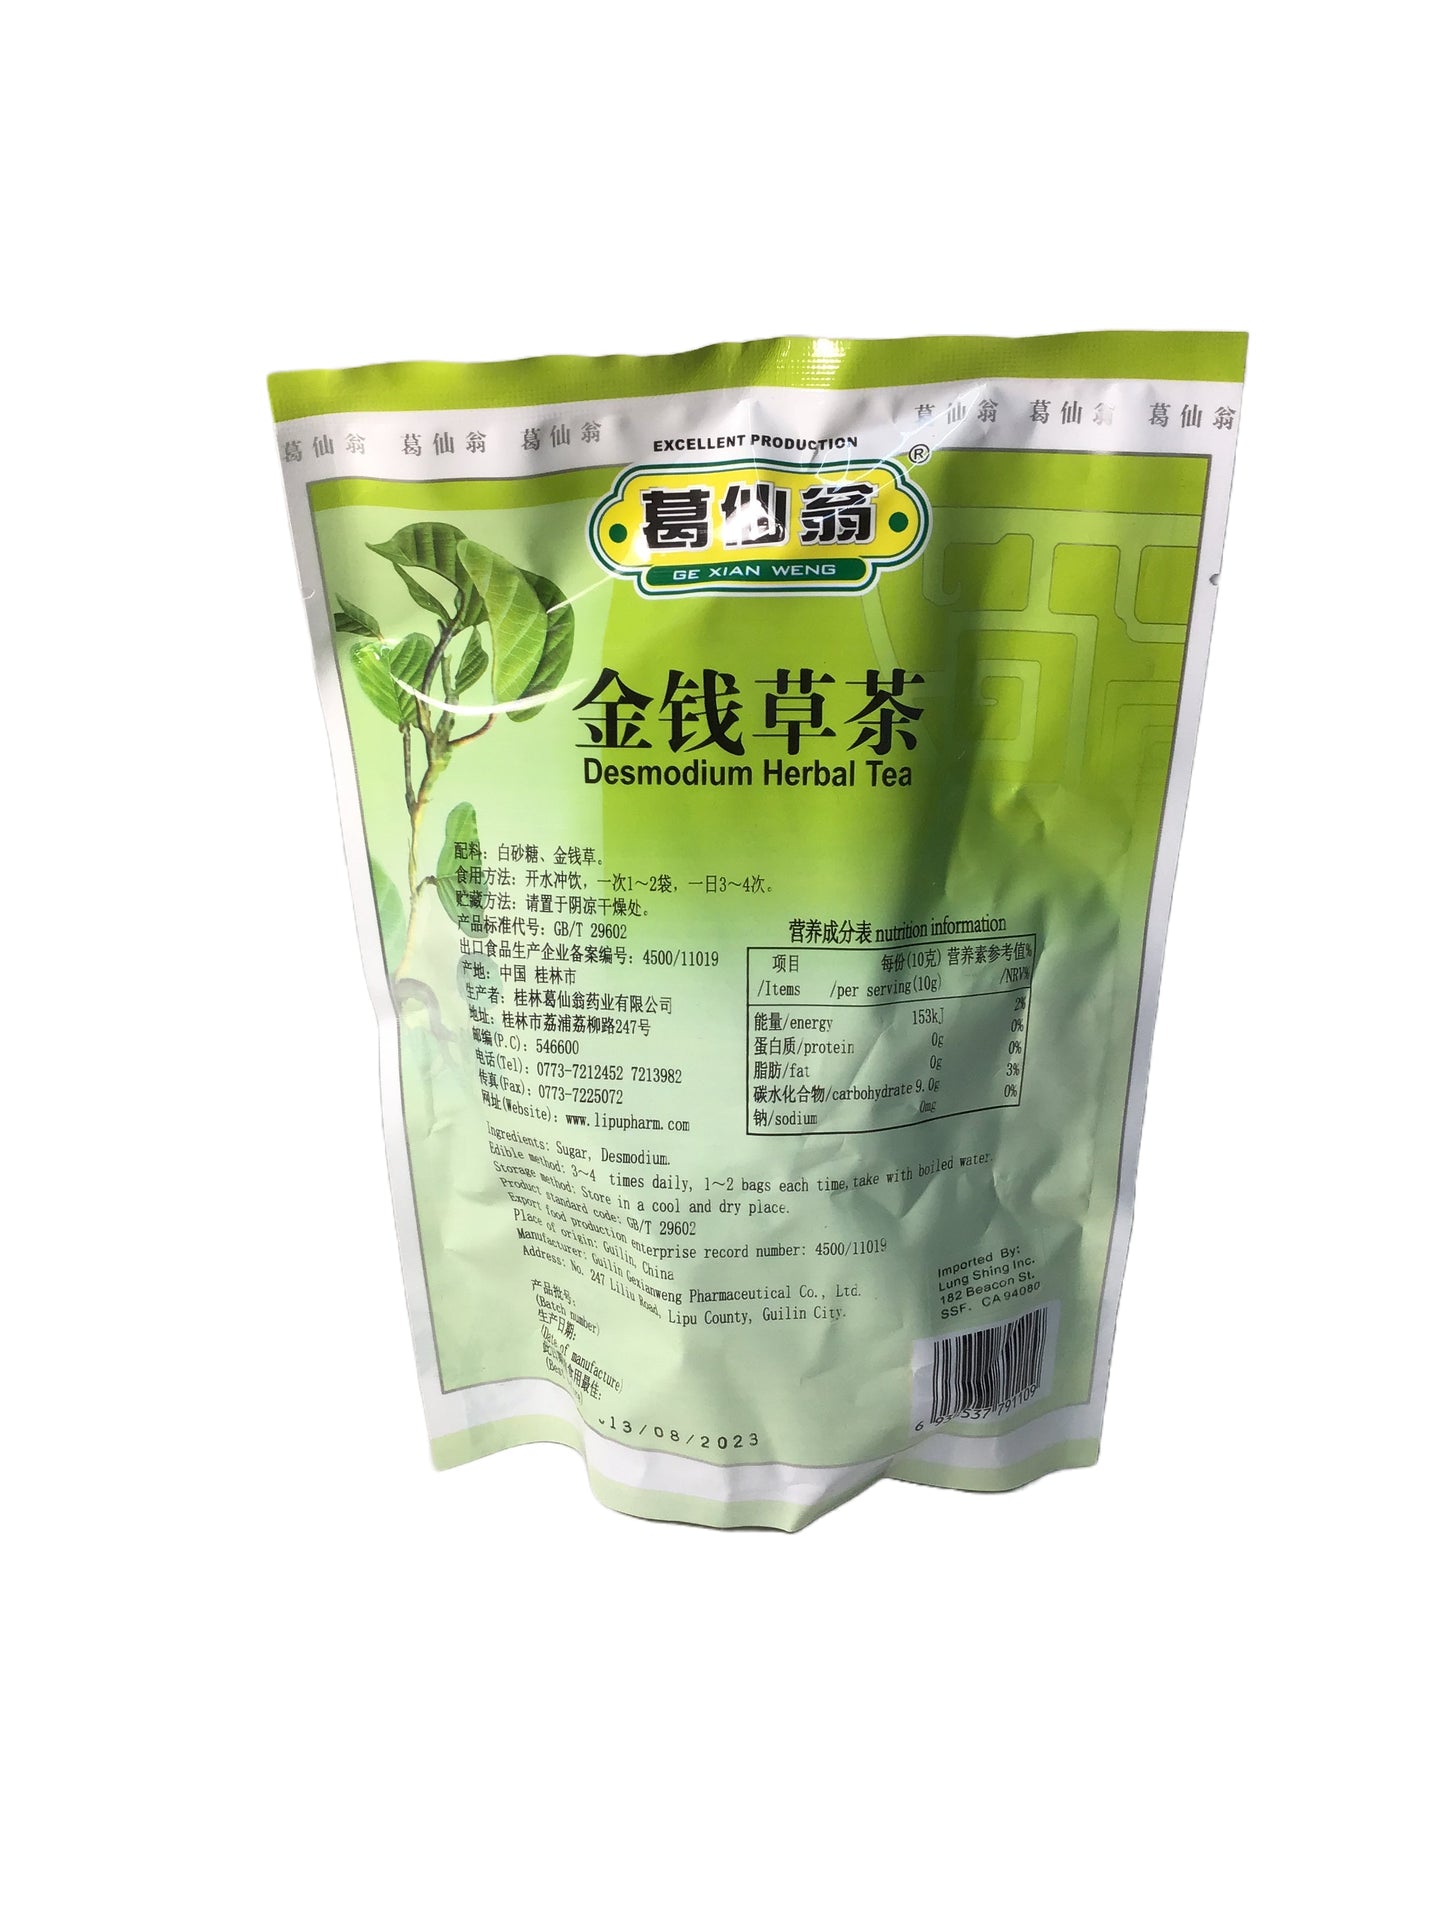 Desmodium Herbal Tea (10 grams x 16 bags) 葛仙翁 金钱草茶 (10克 x 16包)